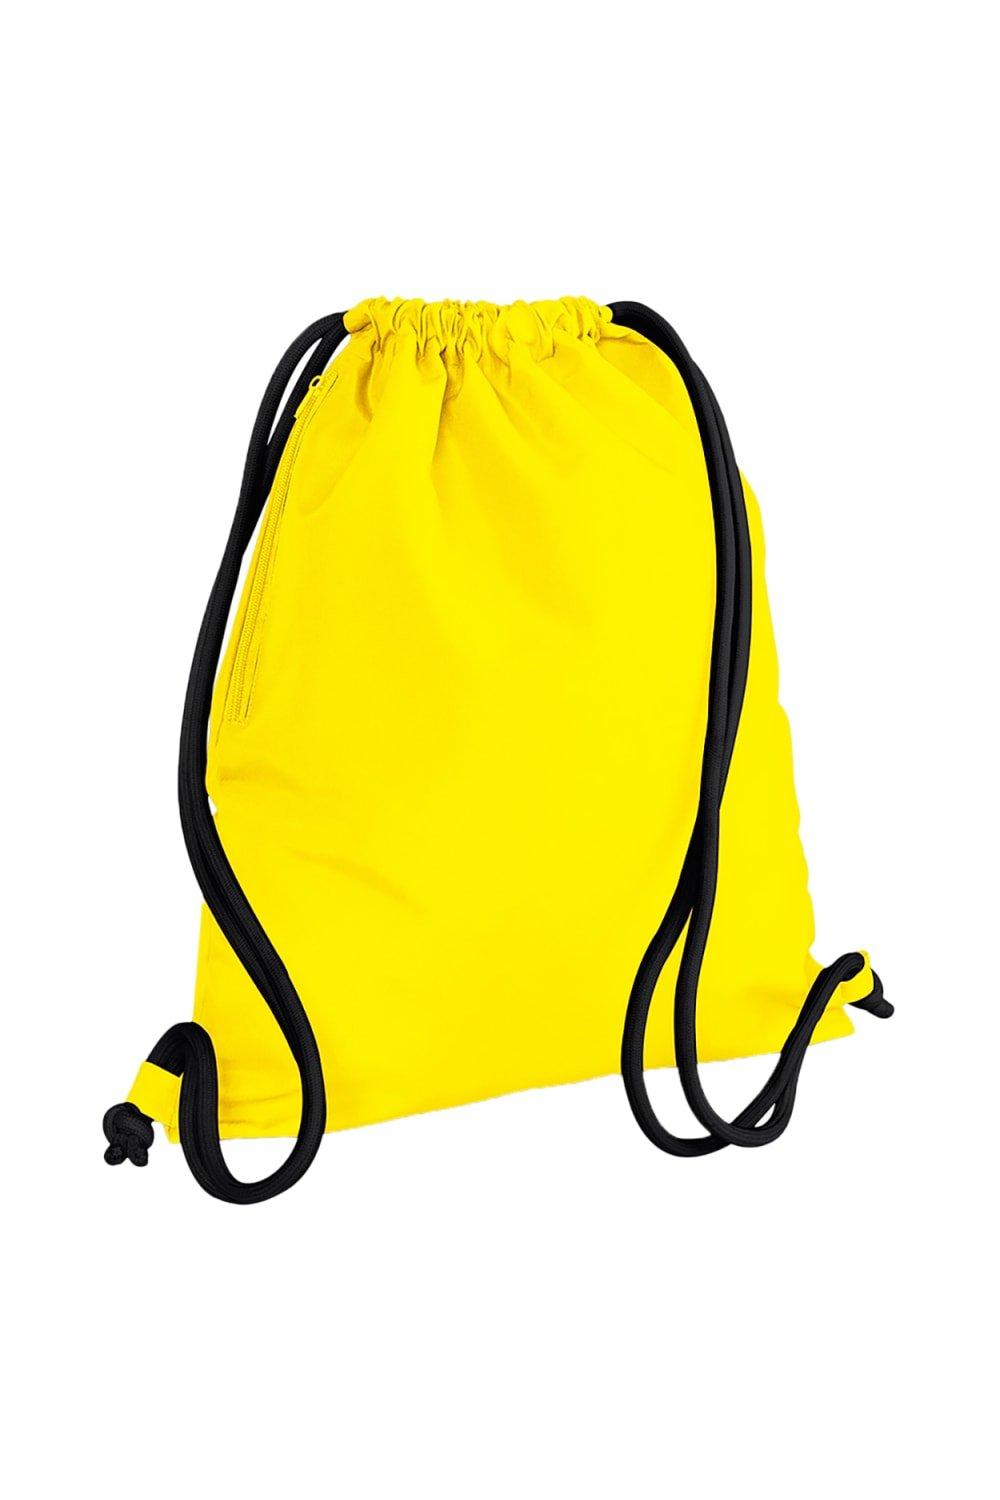 Сумка Icon на шнурке / Gymsac Bagbase, желтый сумка urban gymsac на шнурке sol s белый